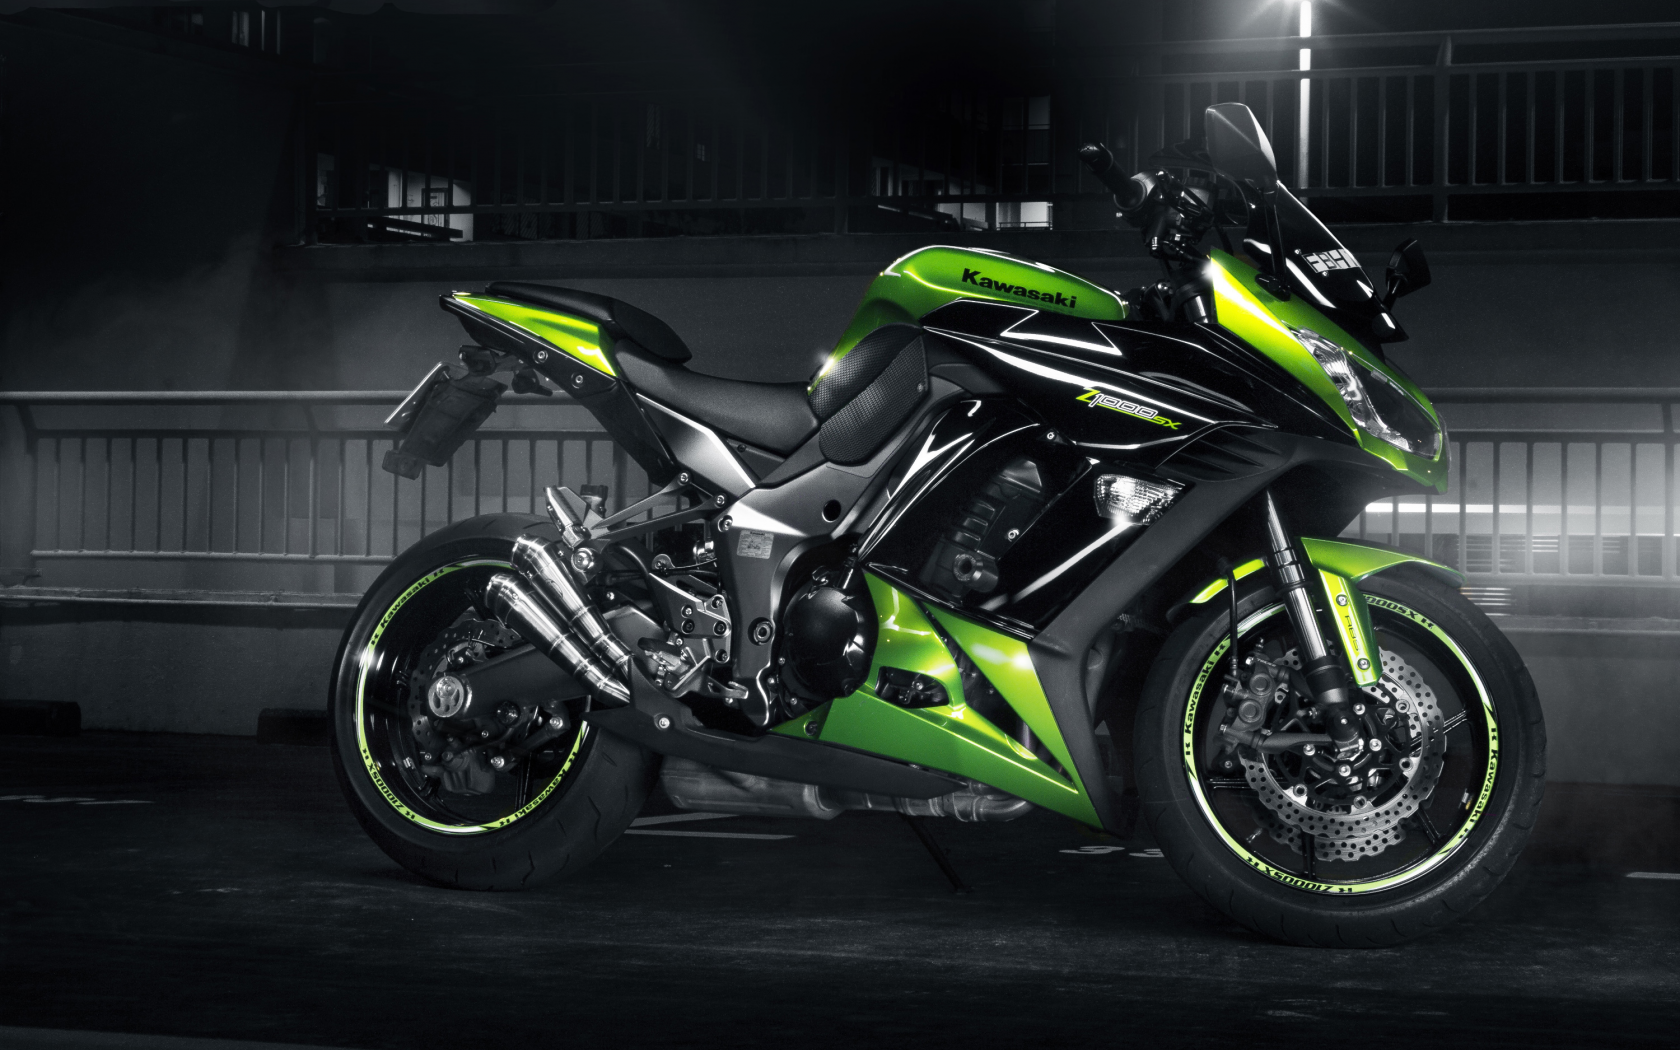 z 1000 sx, green, profile, спортивный мотоцикл, kawasaki